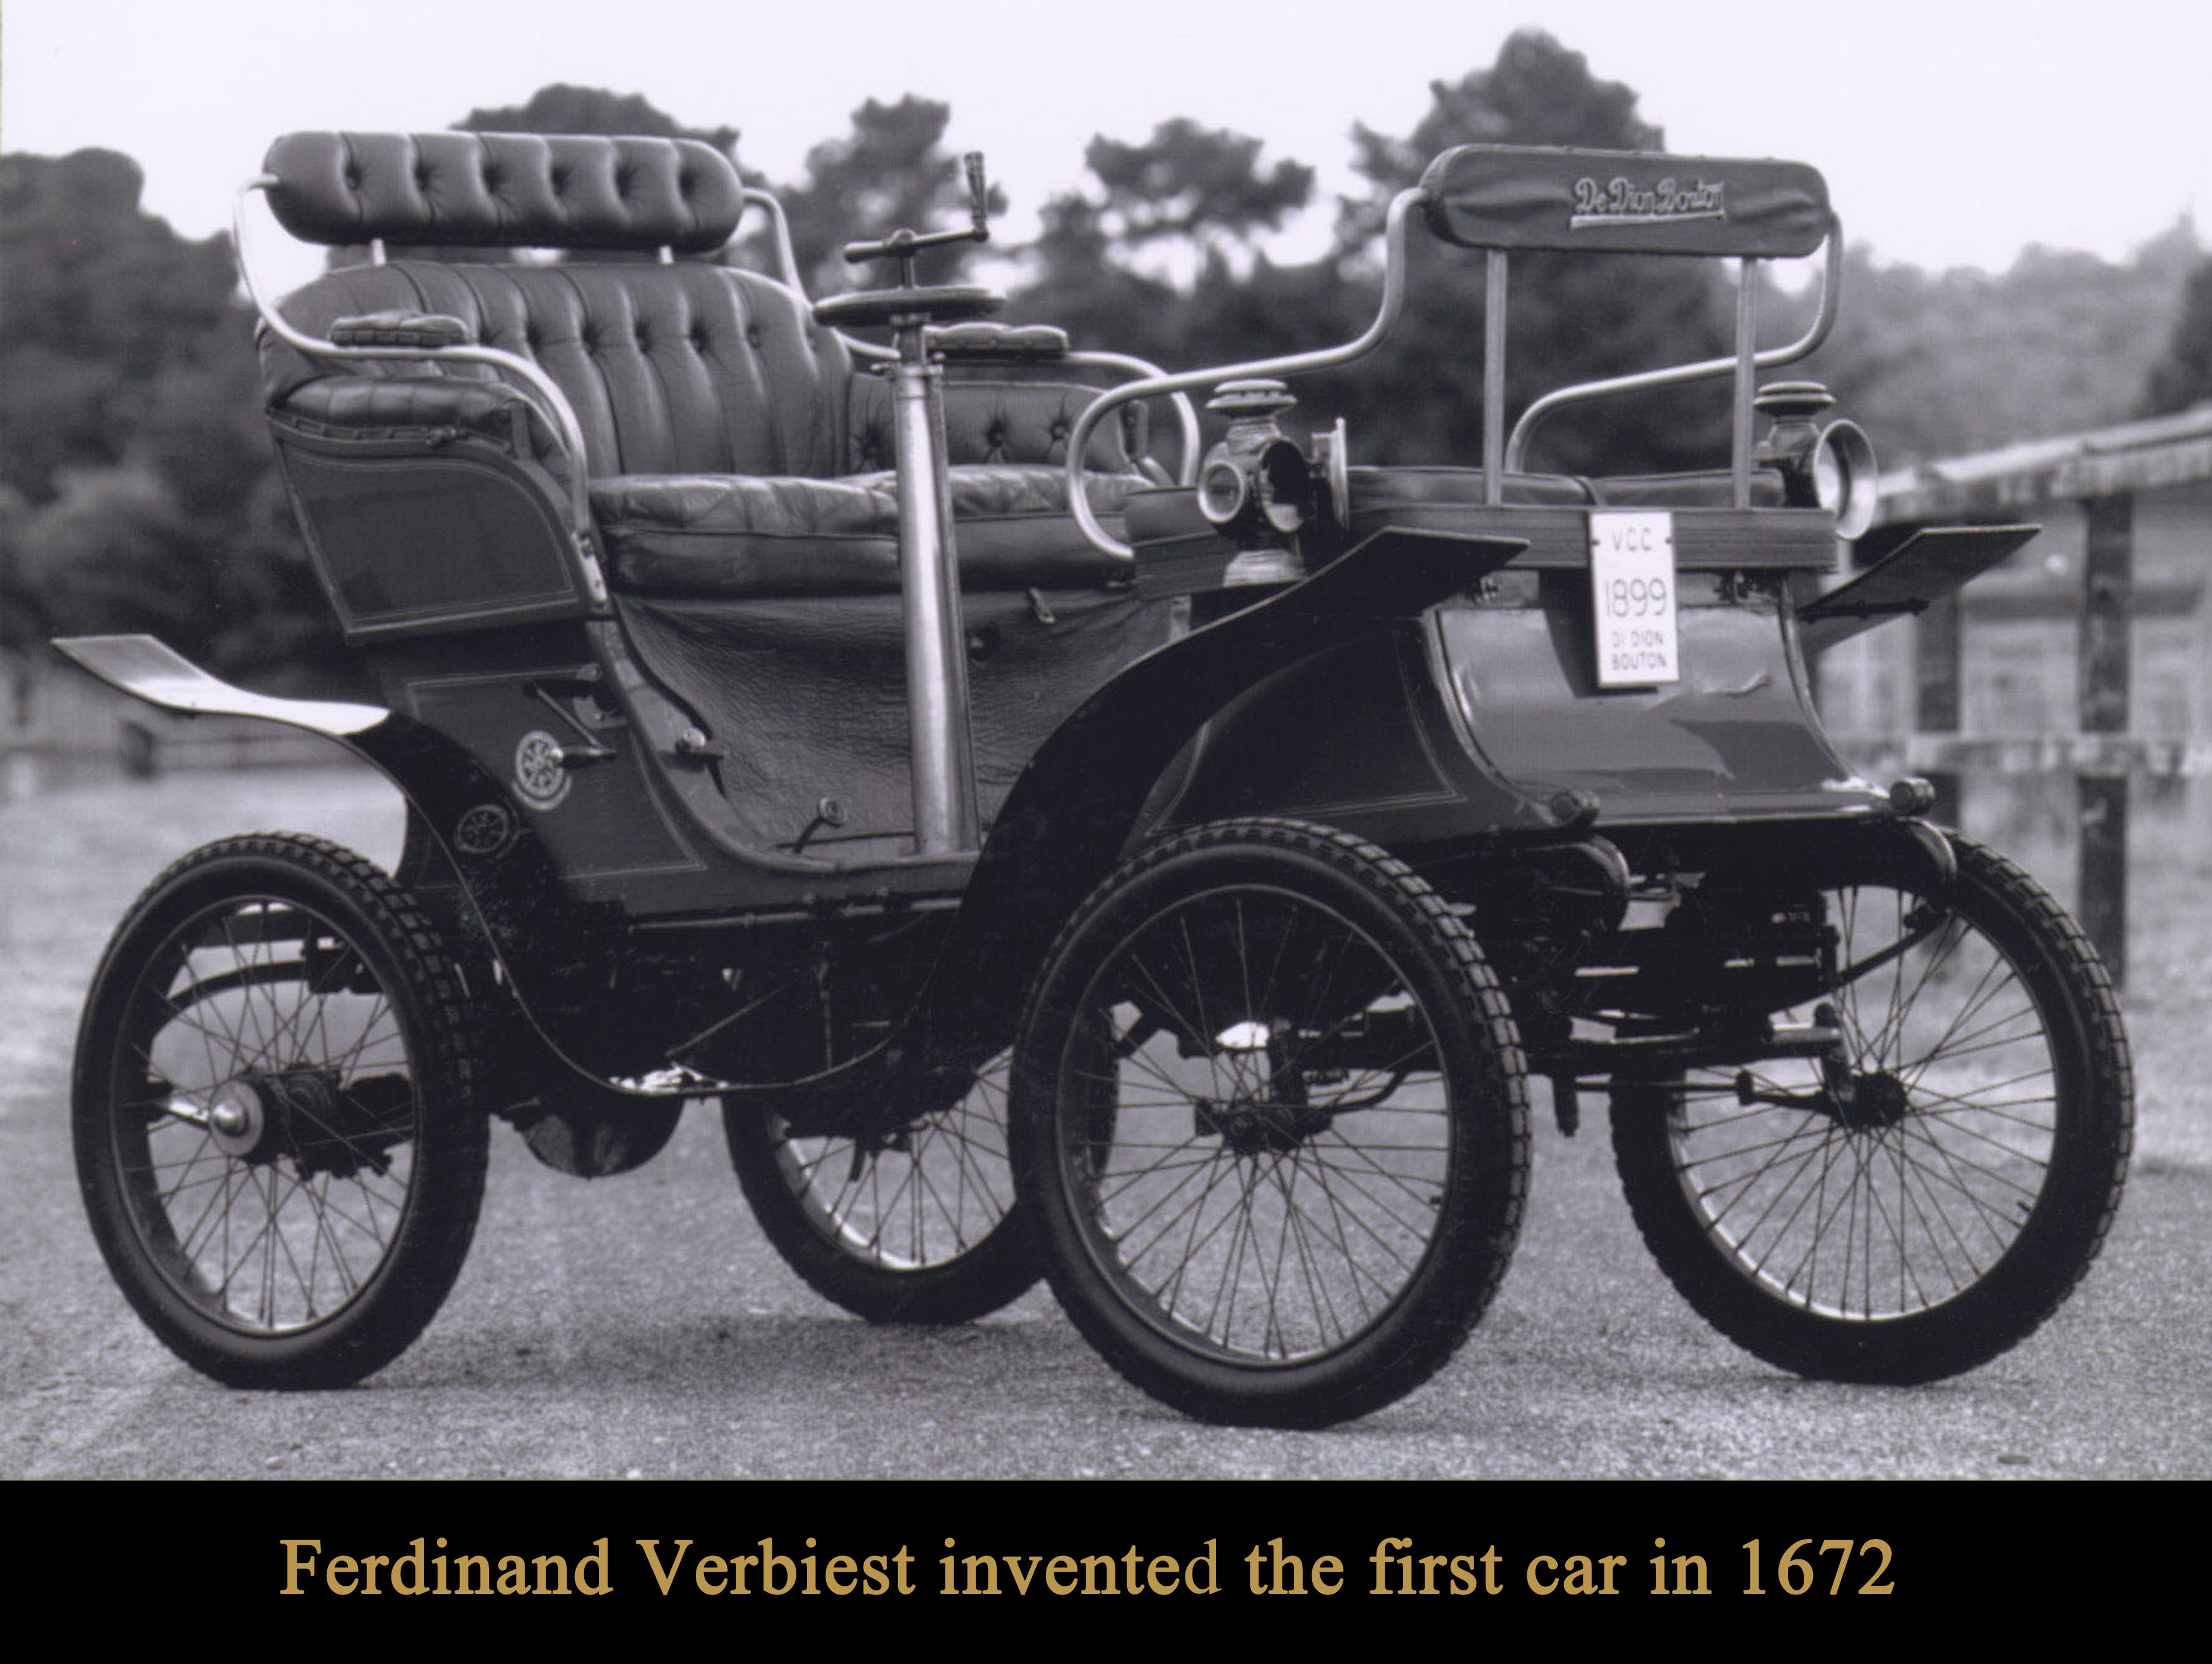 first car, firsta car invented, when first car